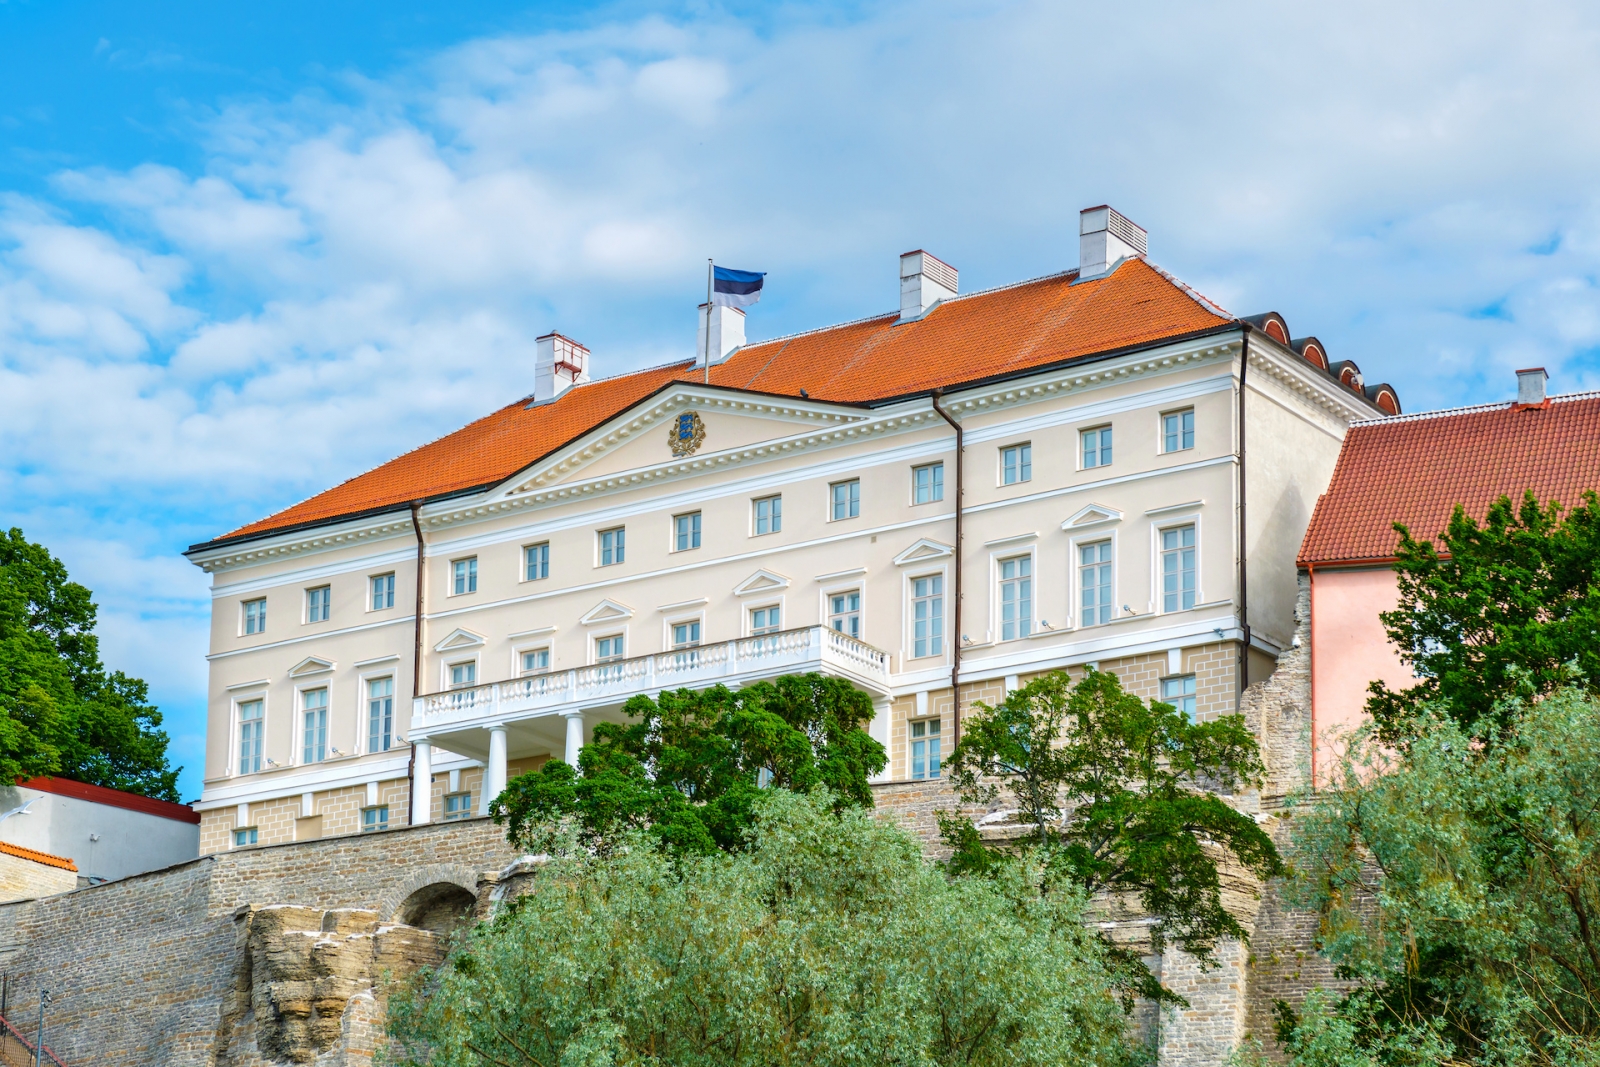 Edificio del gobierno estonio.  Tallin, Estonia